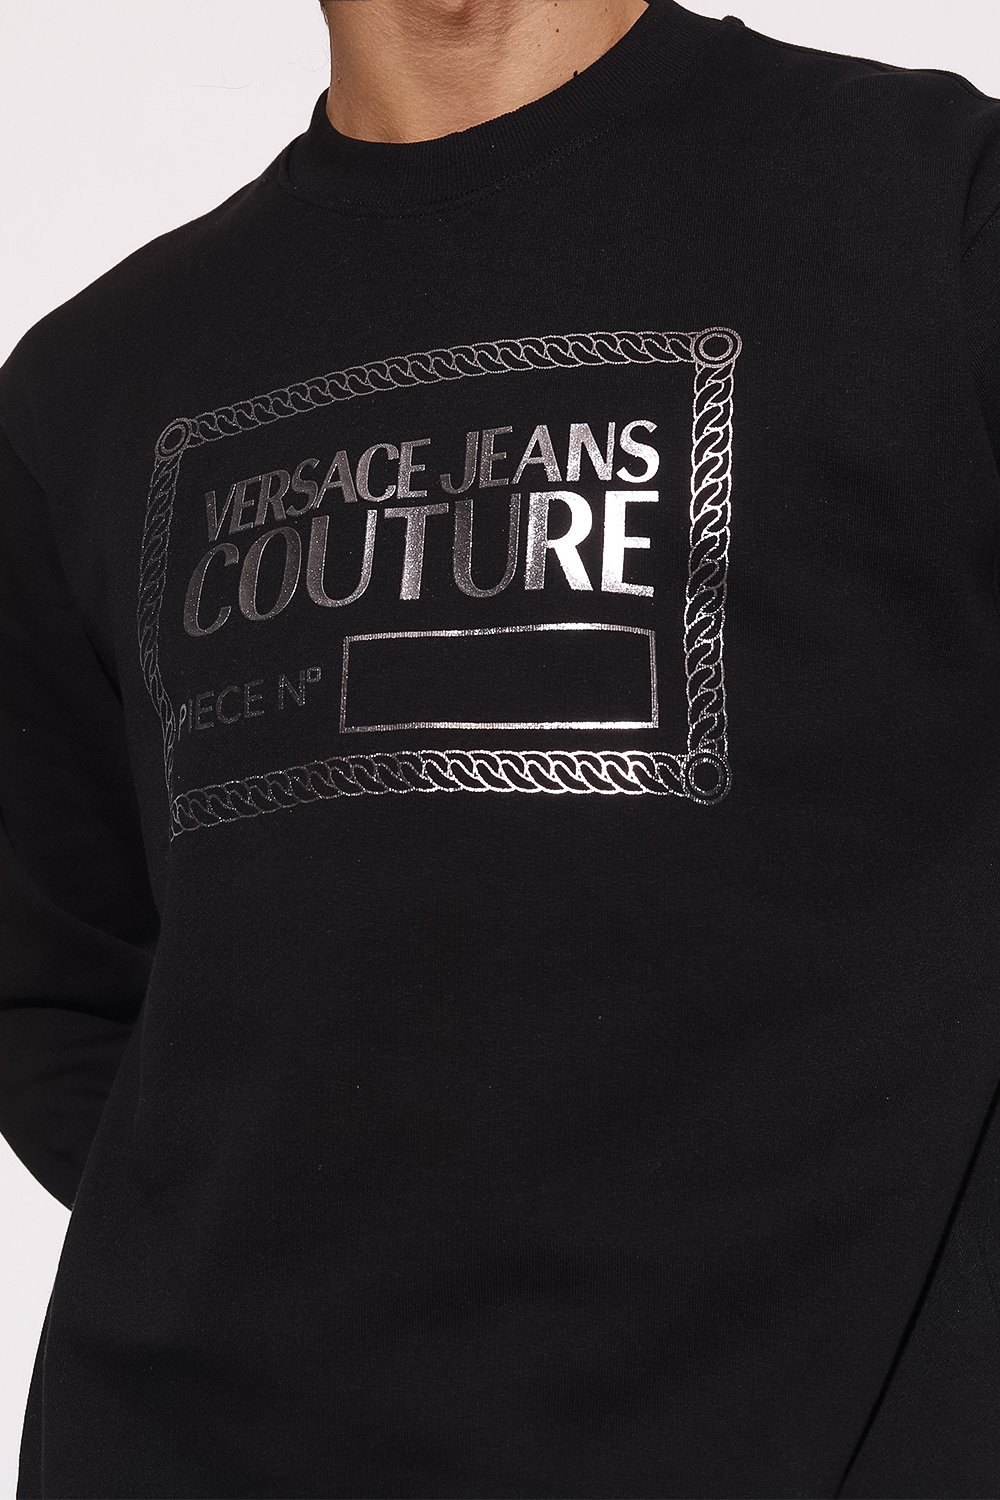 Versace Jeans Couture MM6 Maison Margiela layered sweatshirt